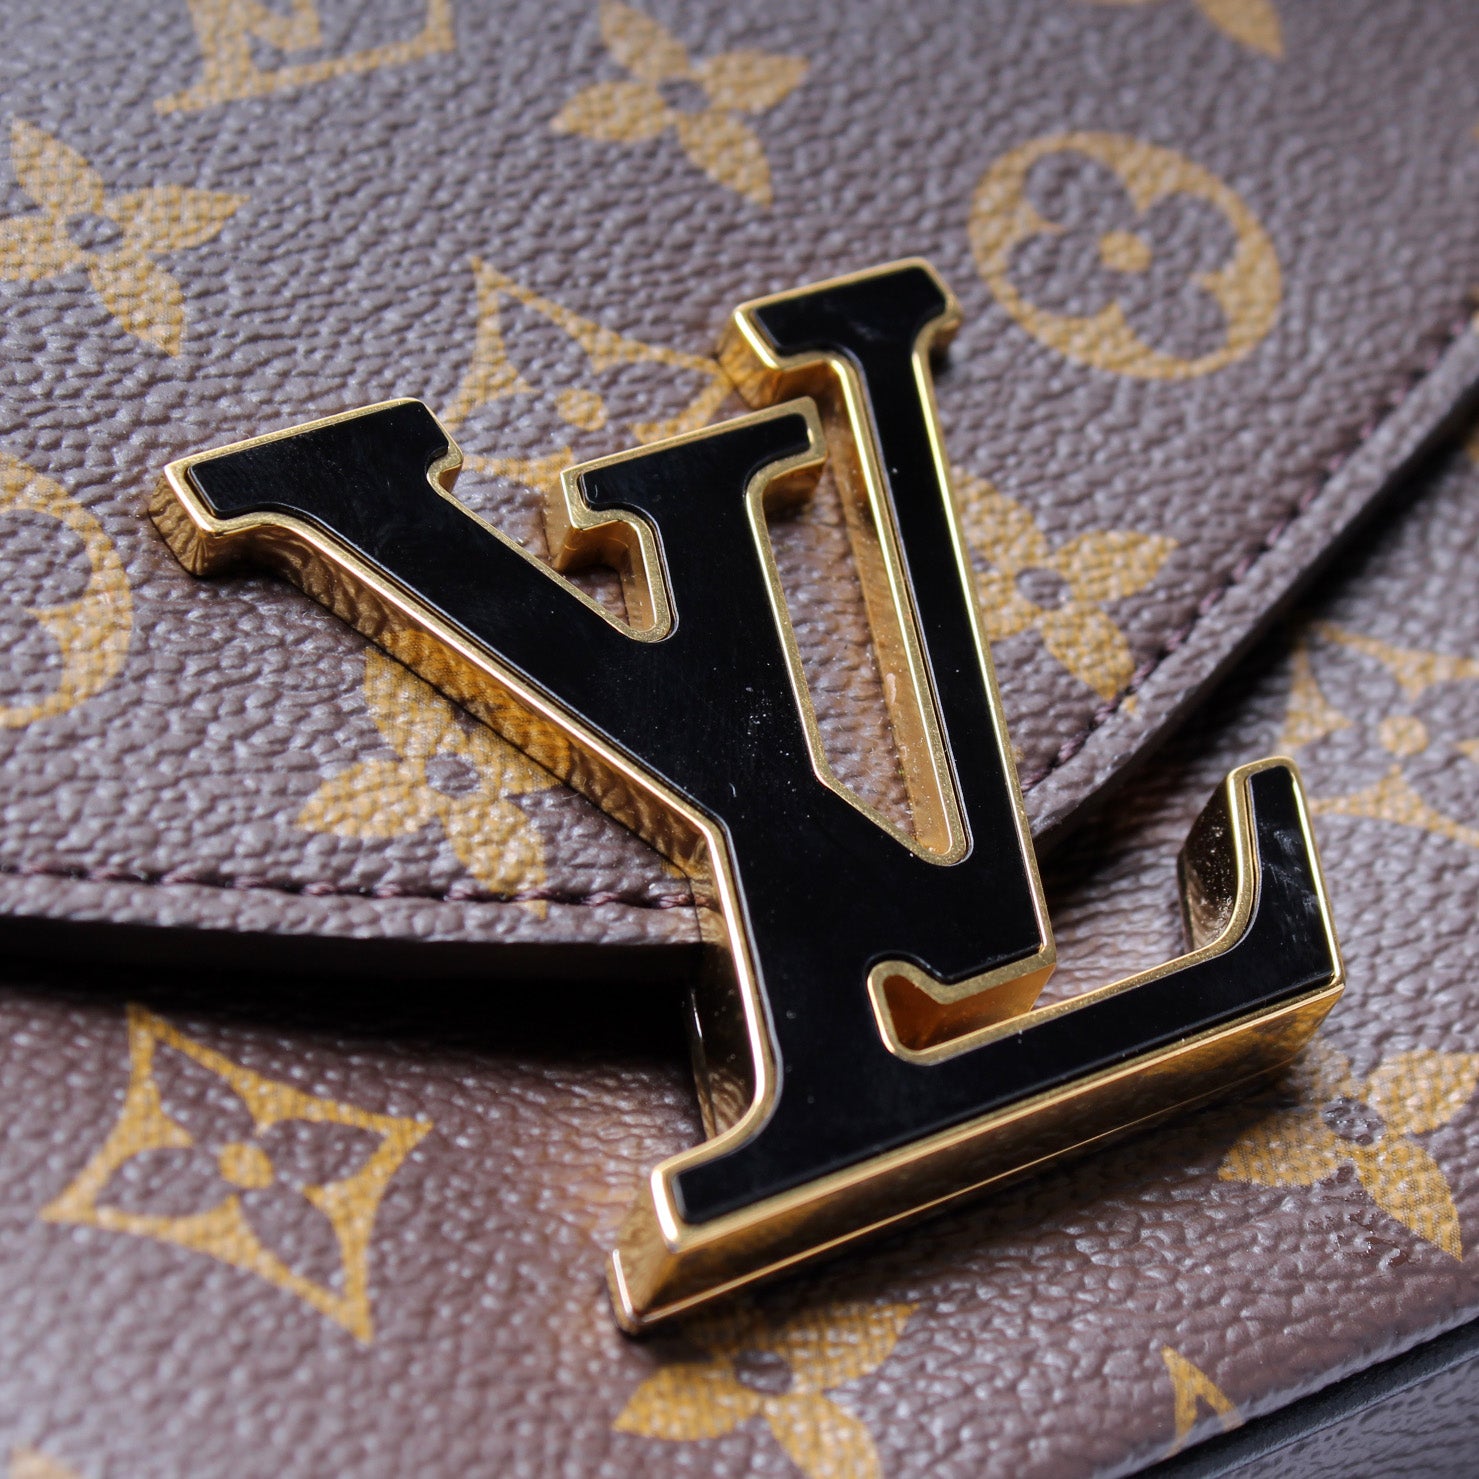 BNIB Louis Vuitton Passy Monogram Chain Bag Size: 24 x 17 x 12 cm